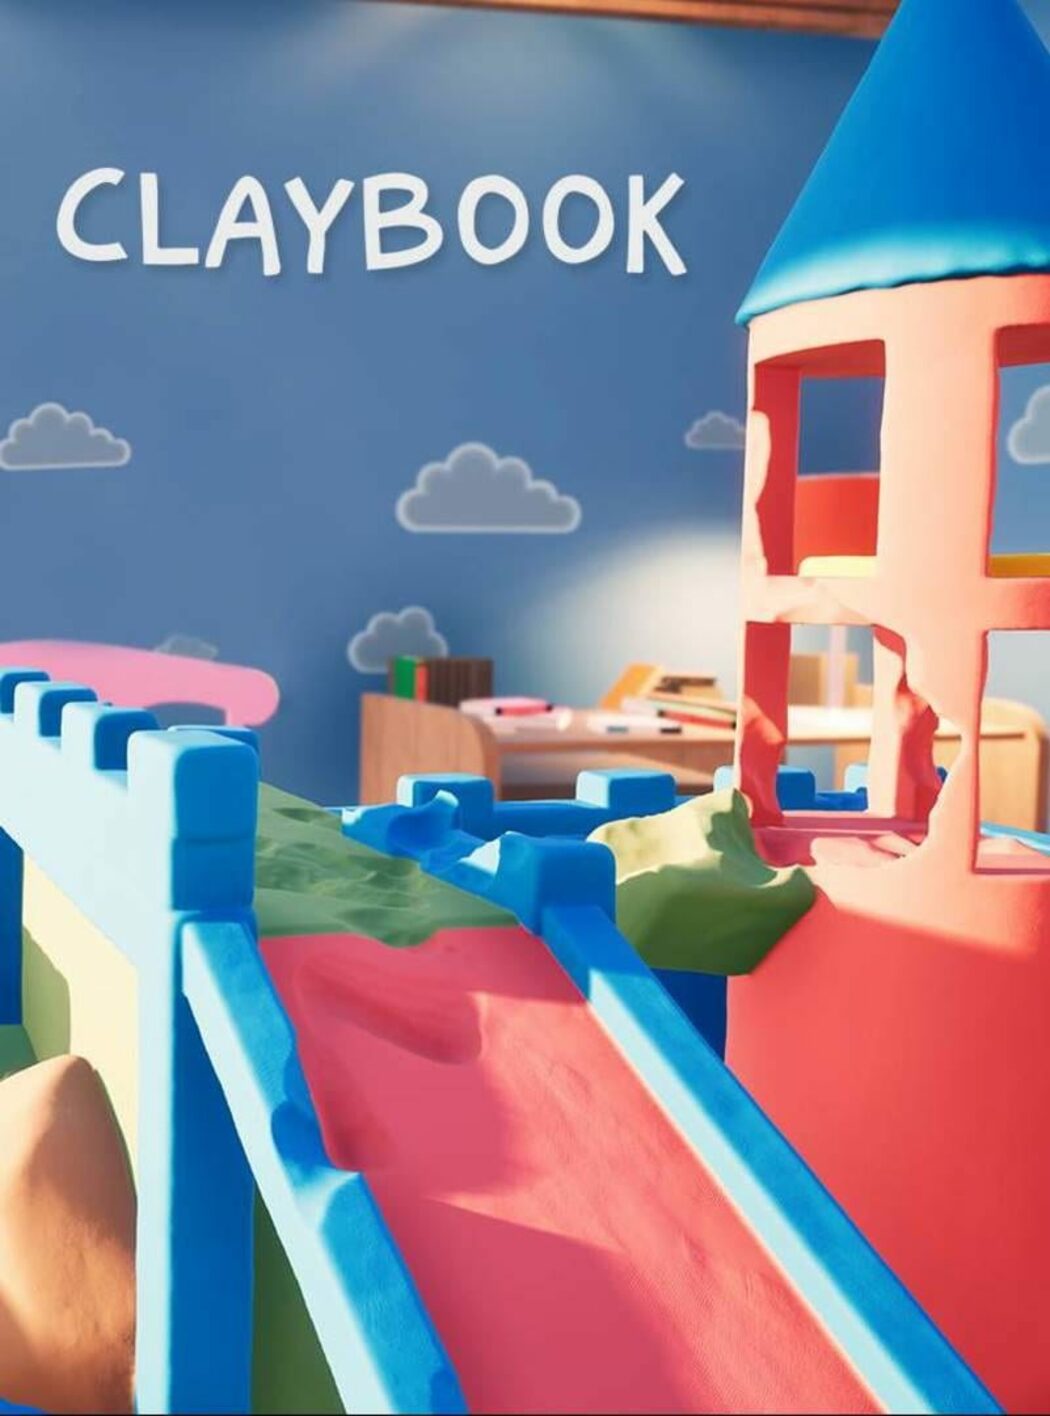 Claybook Download